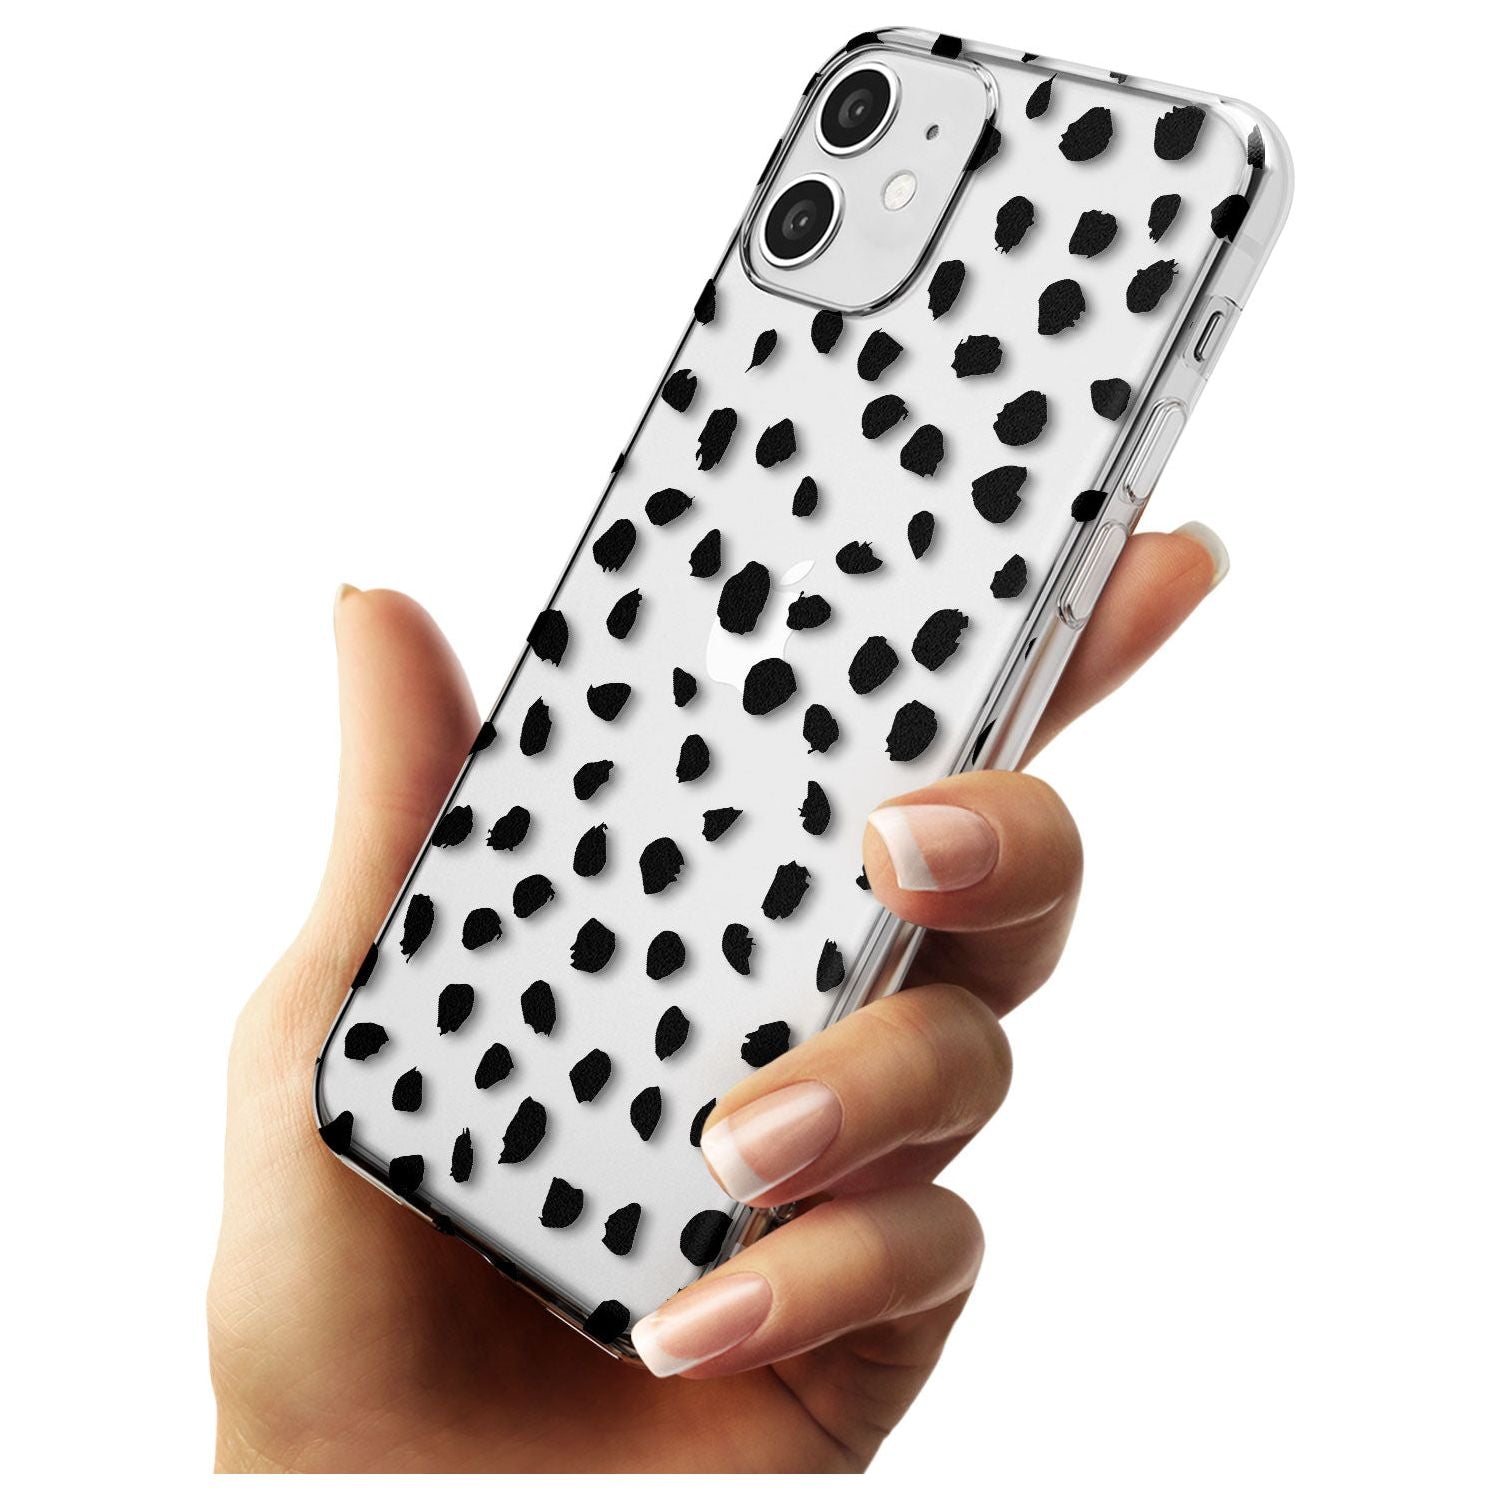 Black on Transparent Dalmatian Polka Dot Spots Slim TPU Phone Case for iPhone 11